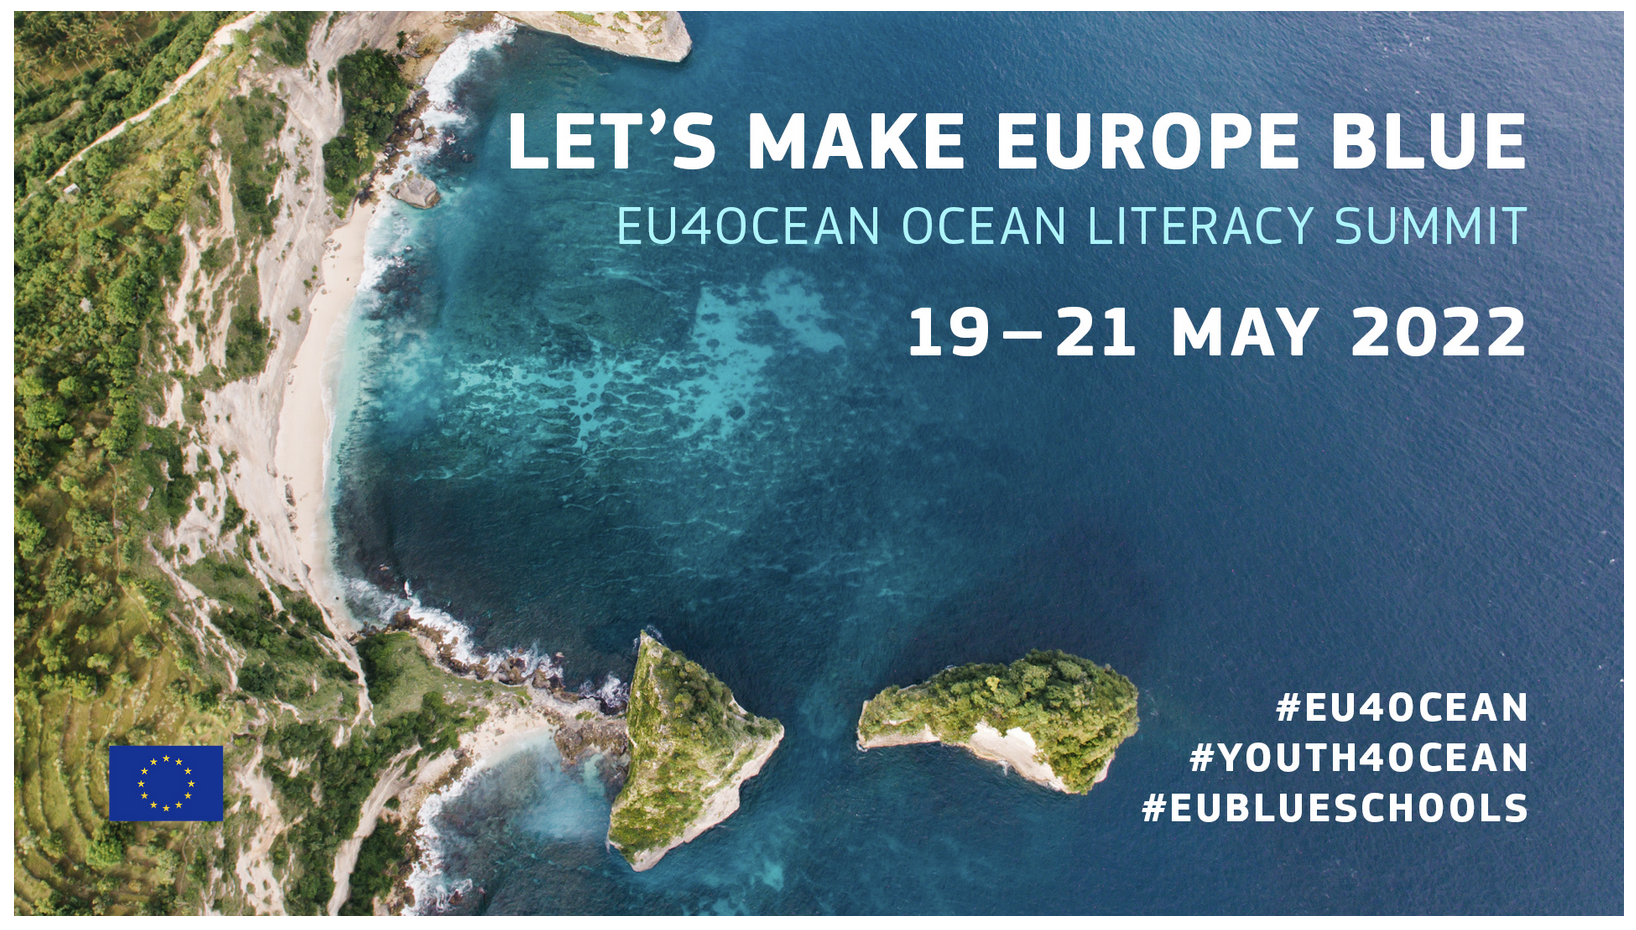 Save the date: The EU4Ocean Ocean Literacy Summit 19-21 May 2022